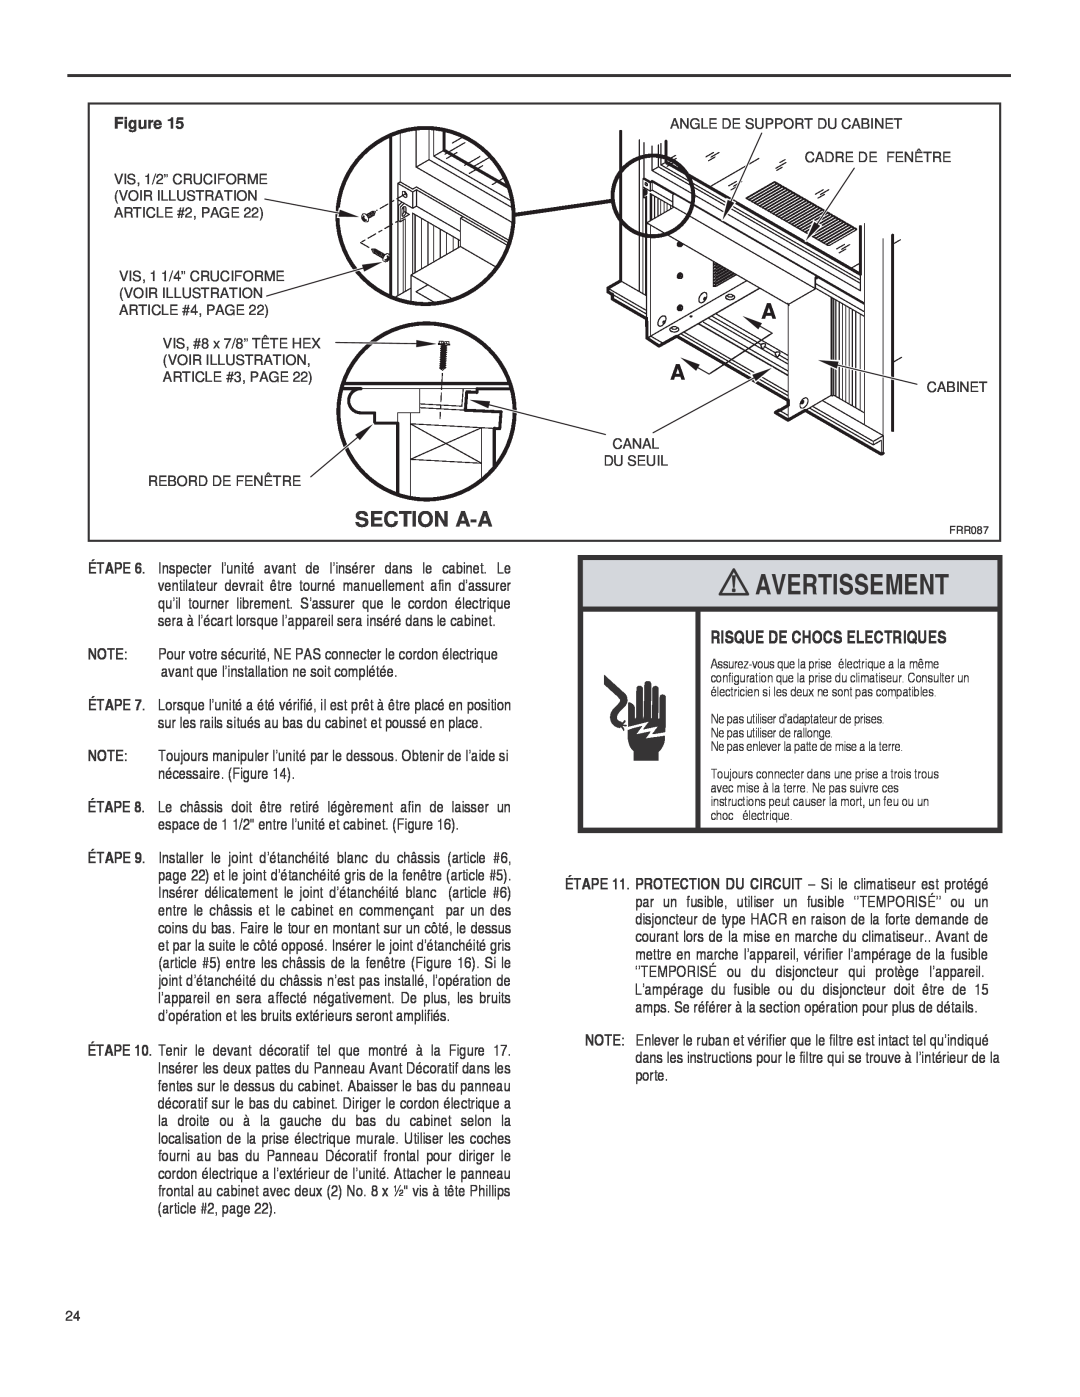 Friedrich SQ10, SQ06, SQ05, SQ08 operation manual Avertissement, Section A-A, Risque De Chocs Electriques, Figure 